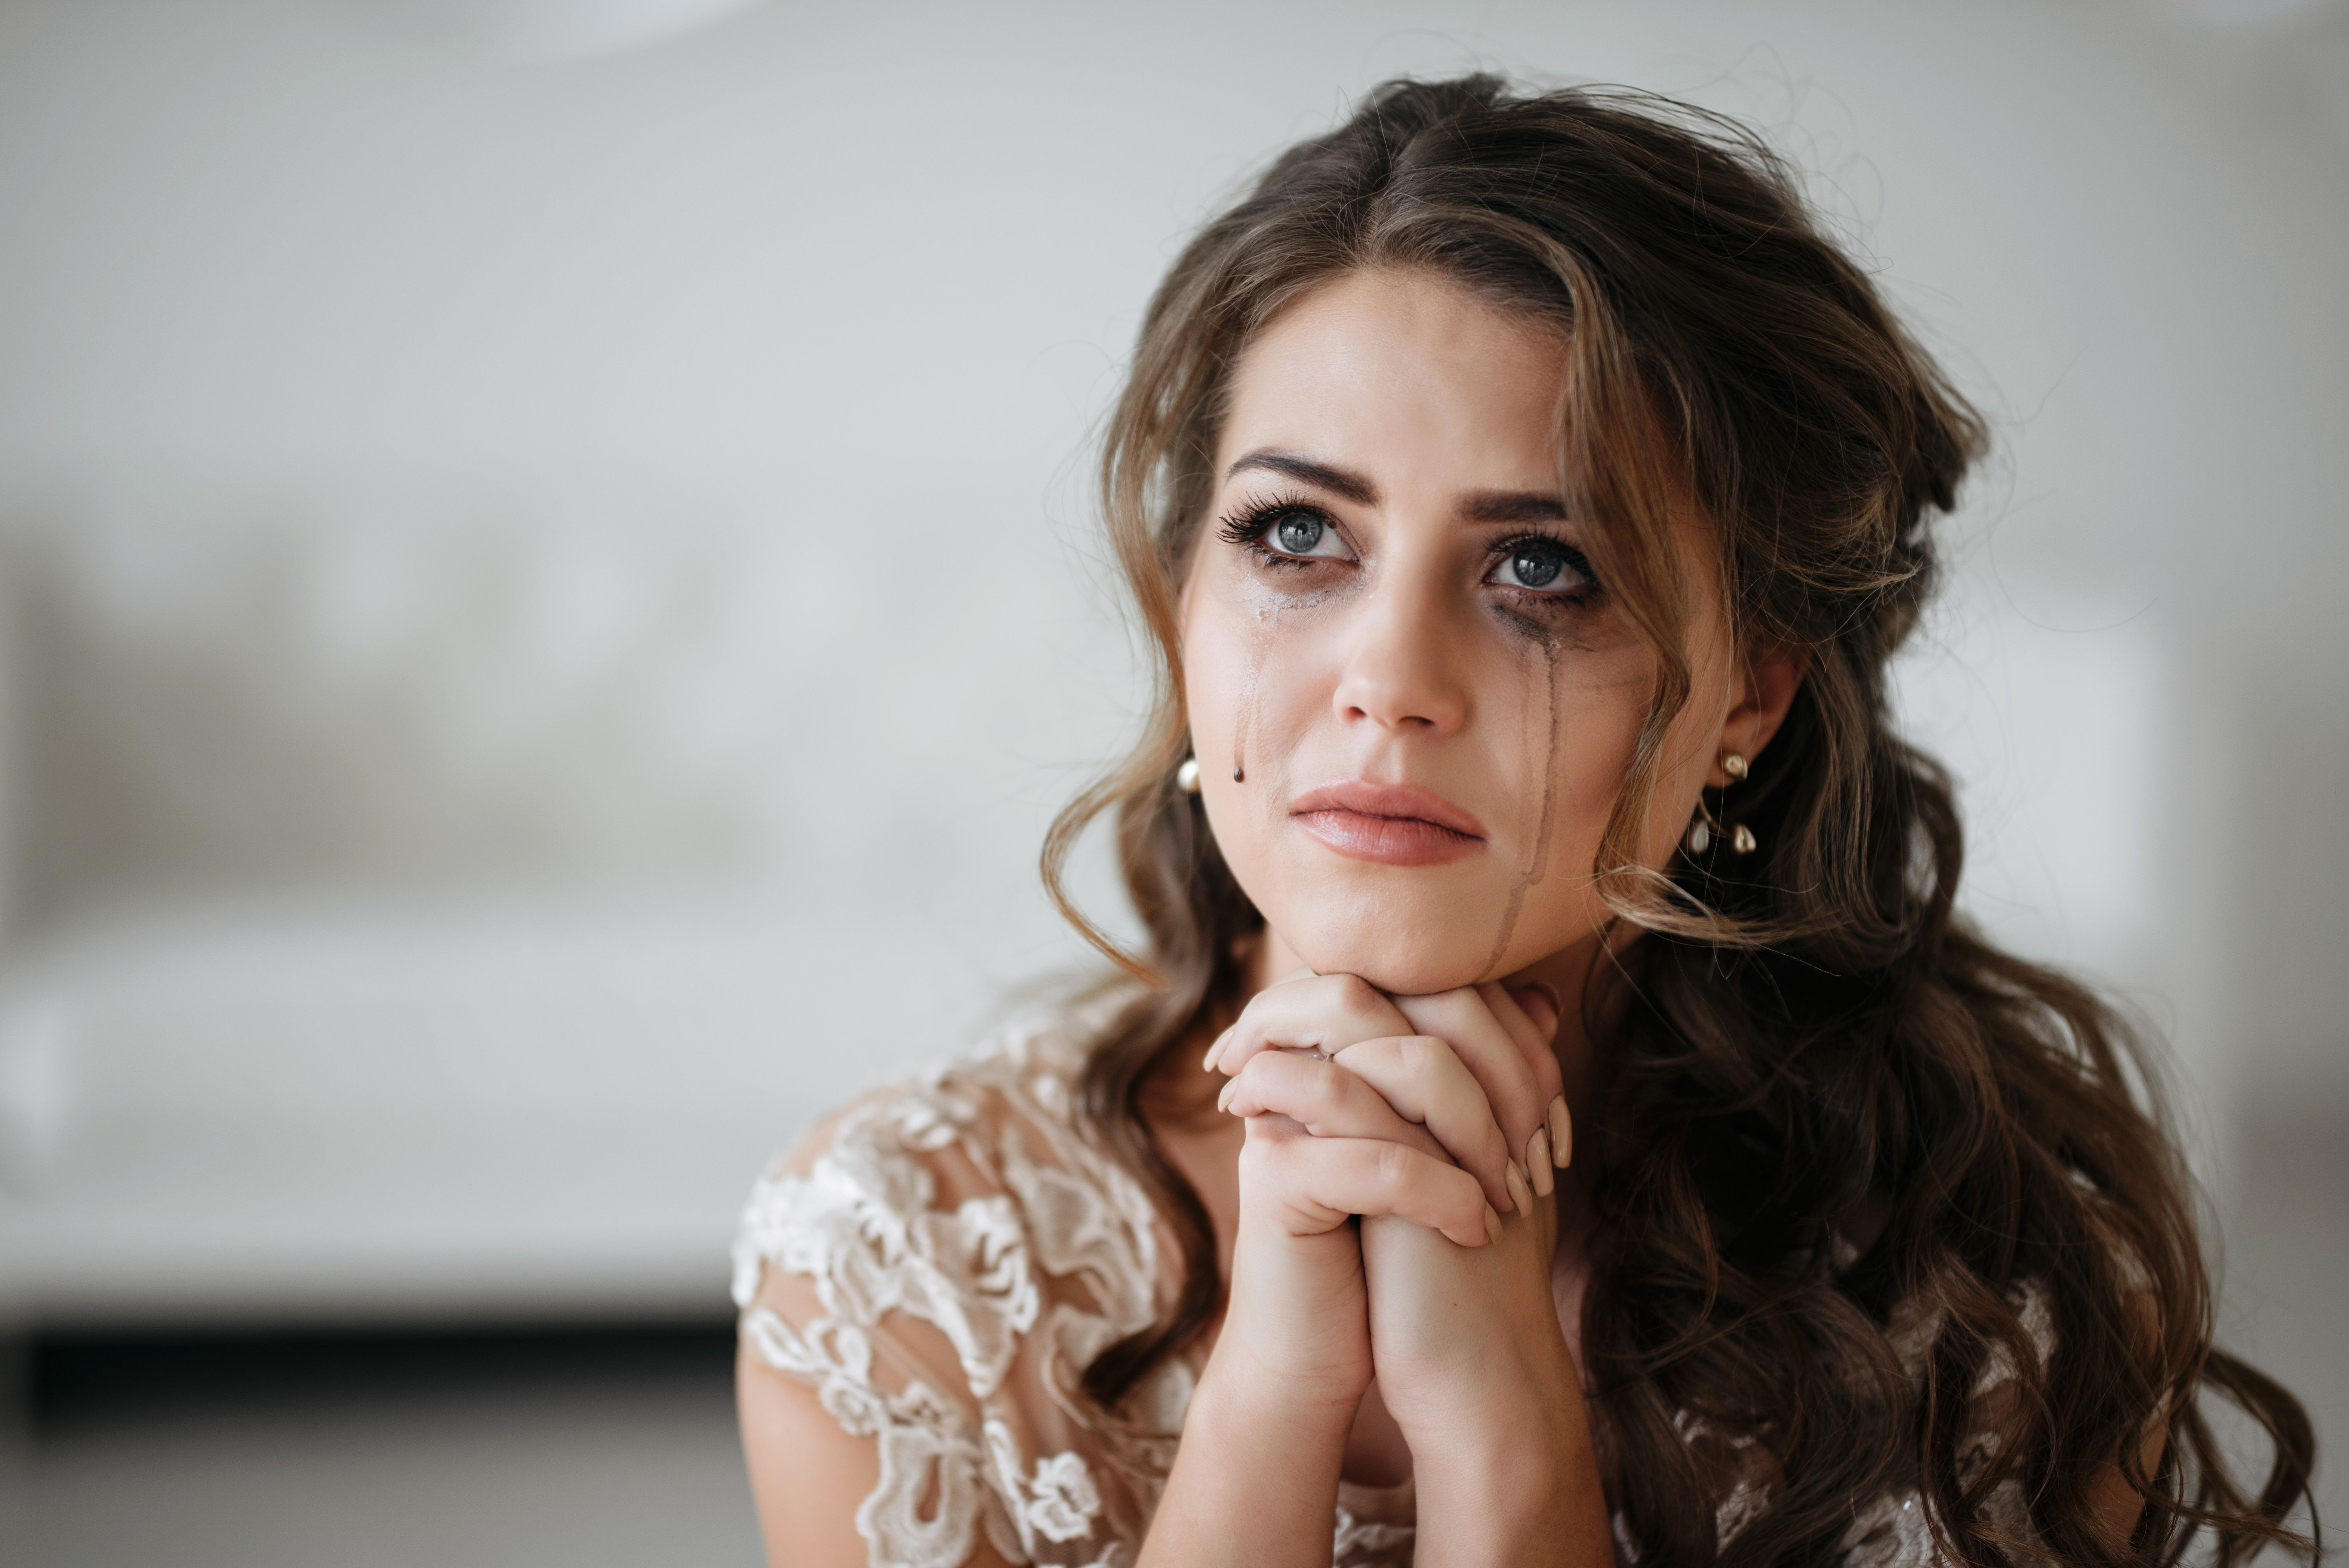 Une mariée triste | Source : Shutterstock